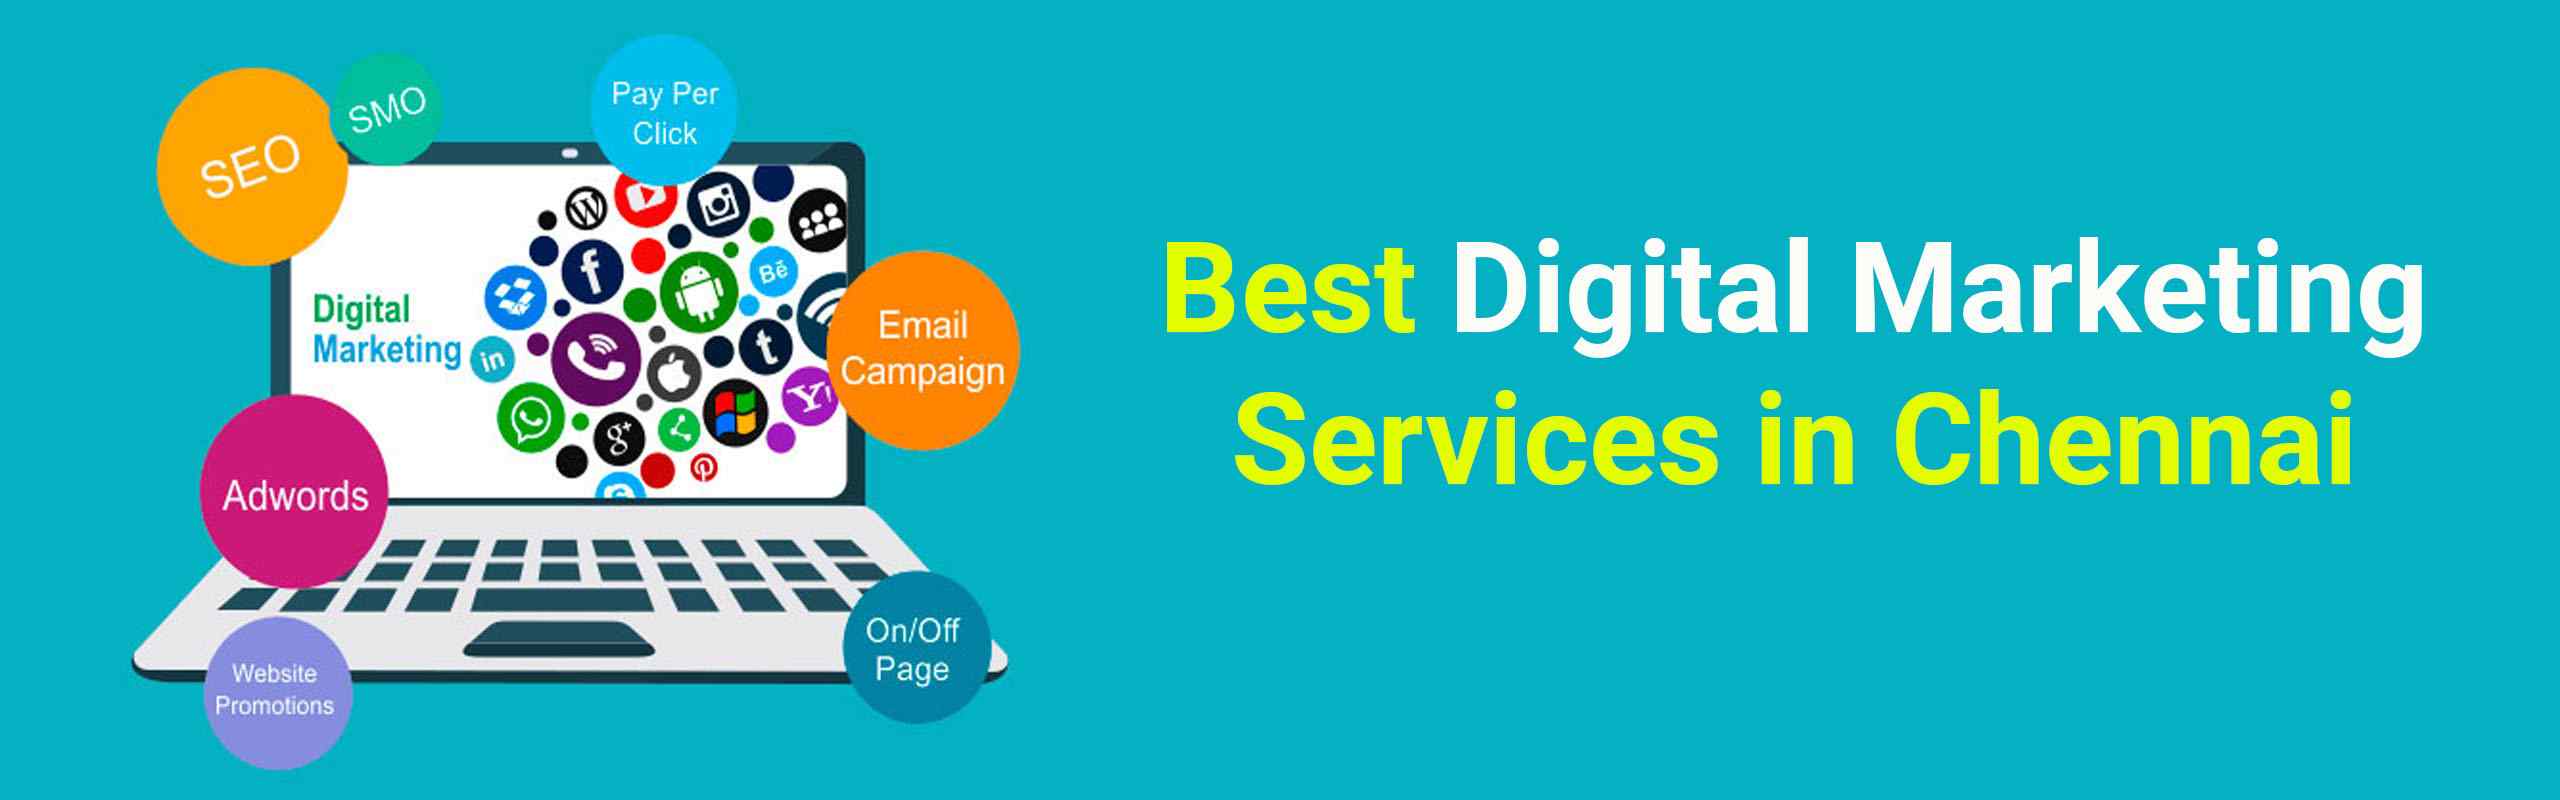 digital marketaing services in chennai